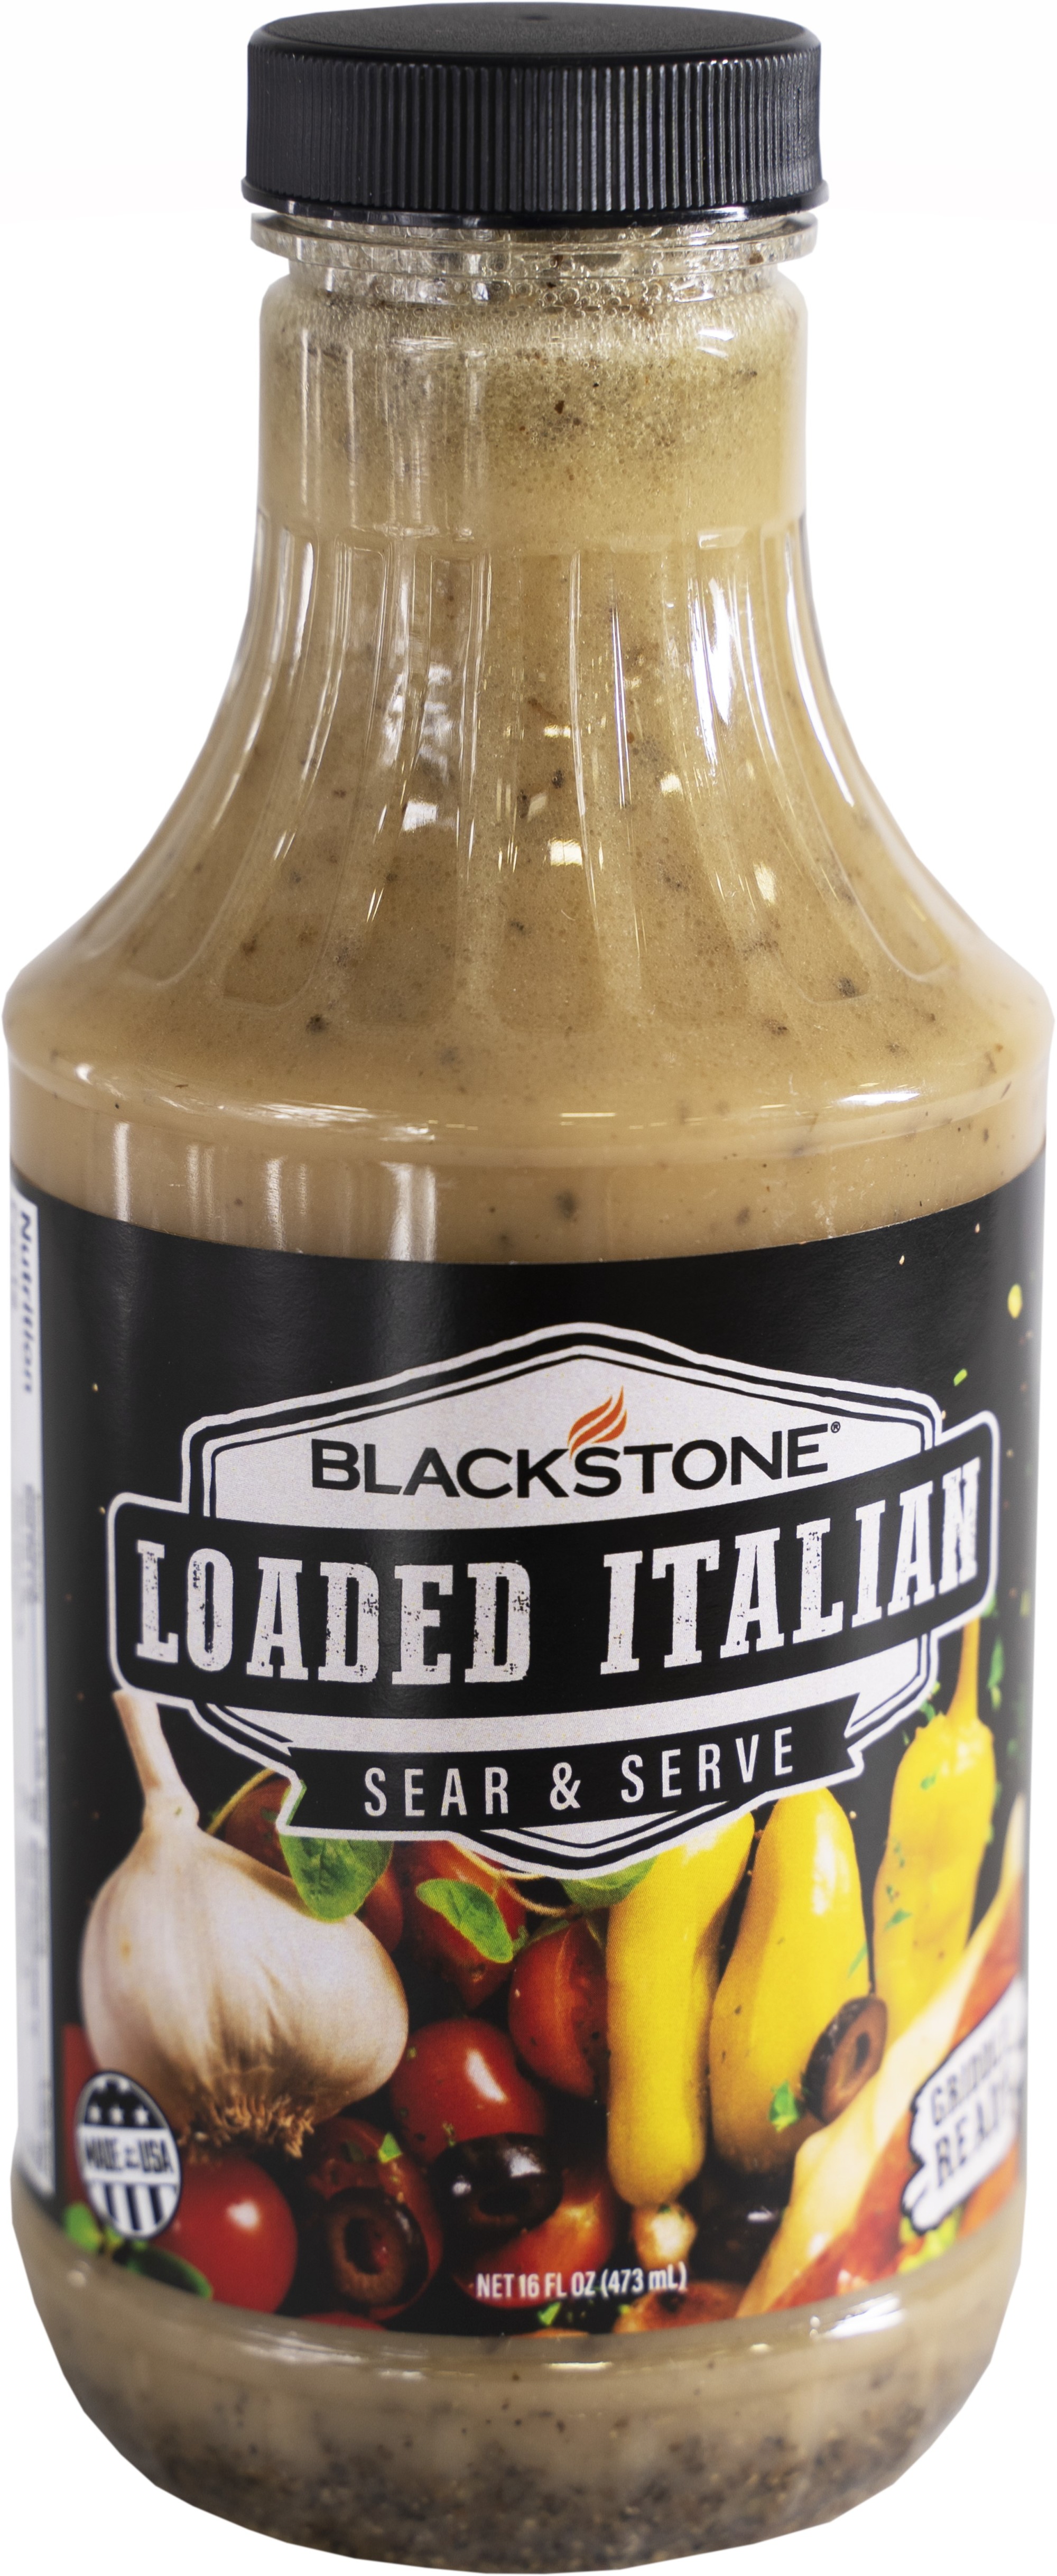 Blackstone Loaded Italian Sauce - image 1 of 9